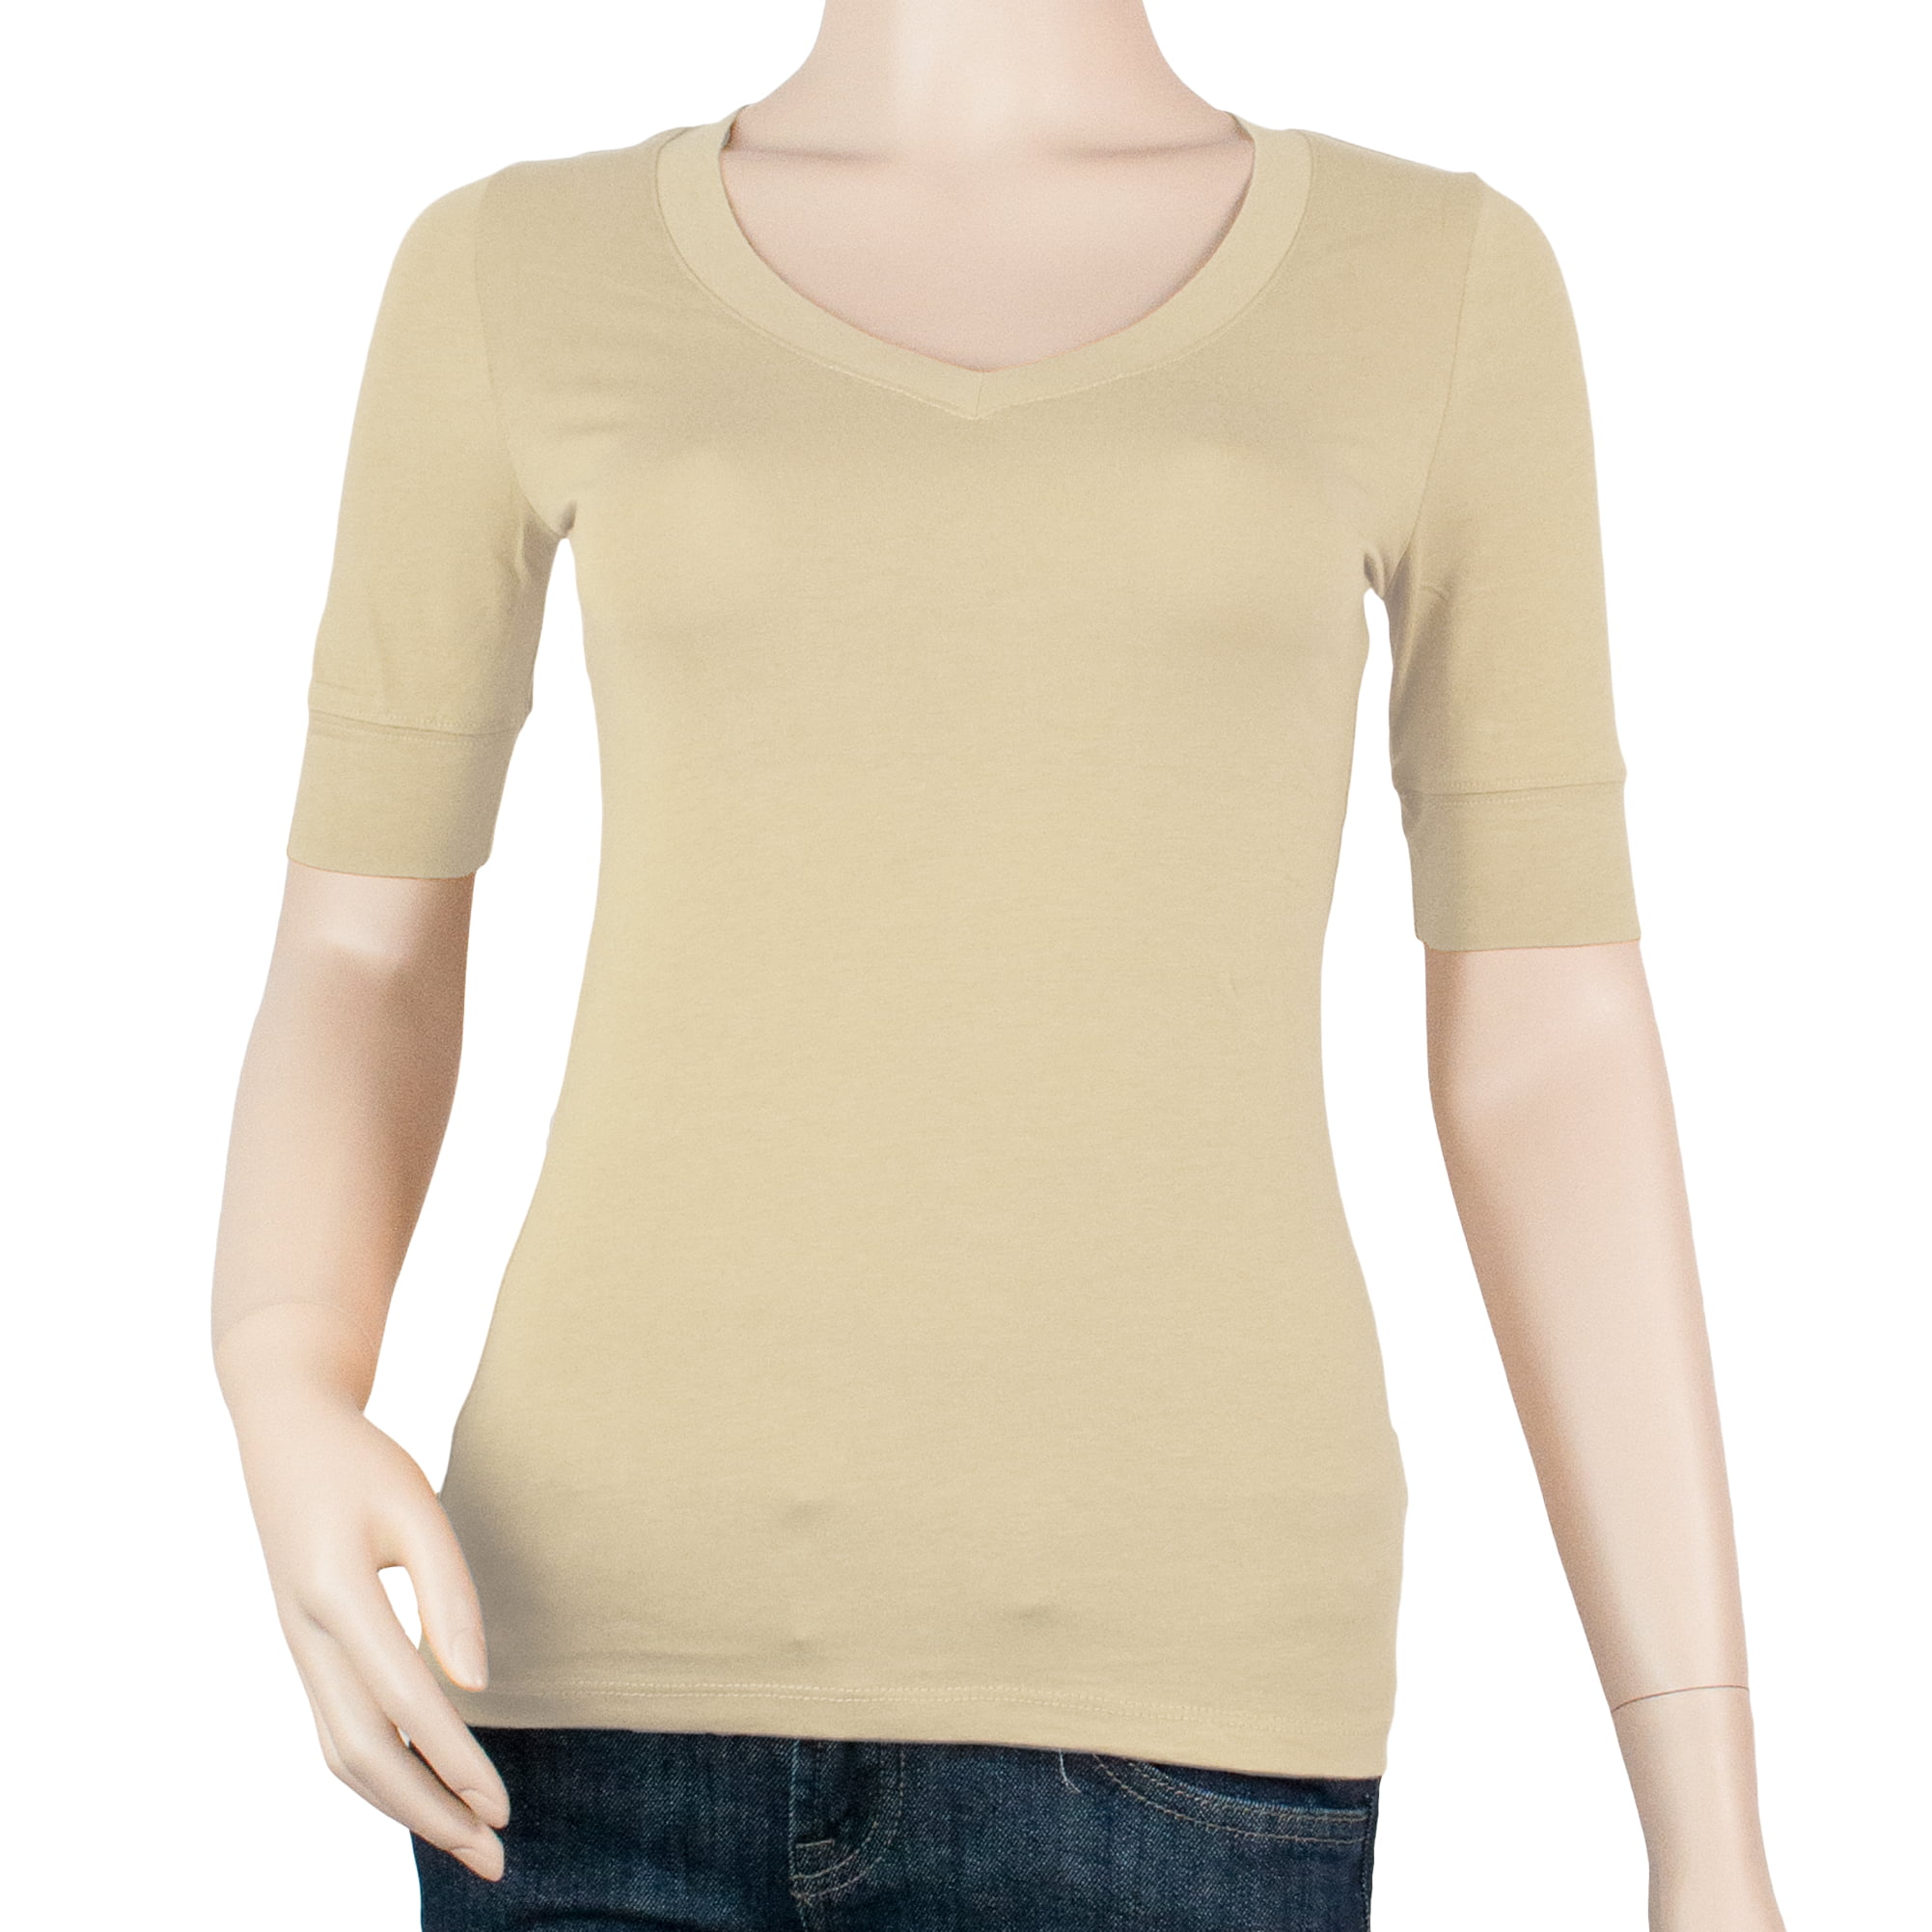 Snj Womens Basic Elbow Sleeve V Neck Cotton T Shirt Plain Top Plus